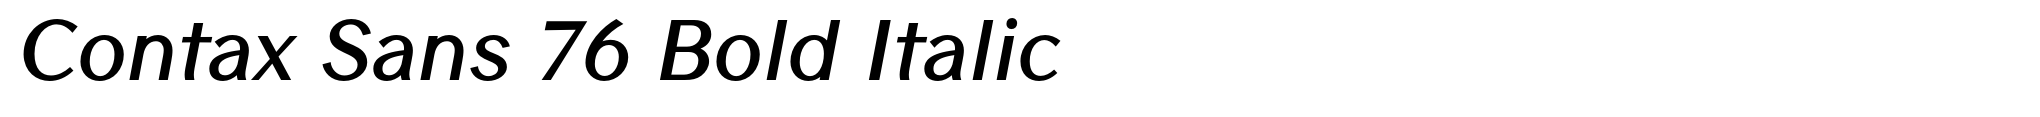 Contax Sans 76 Bold Italic image